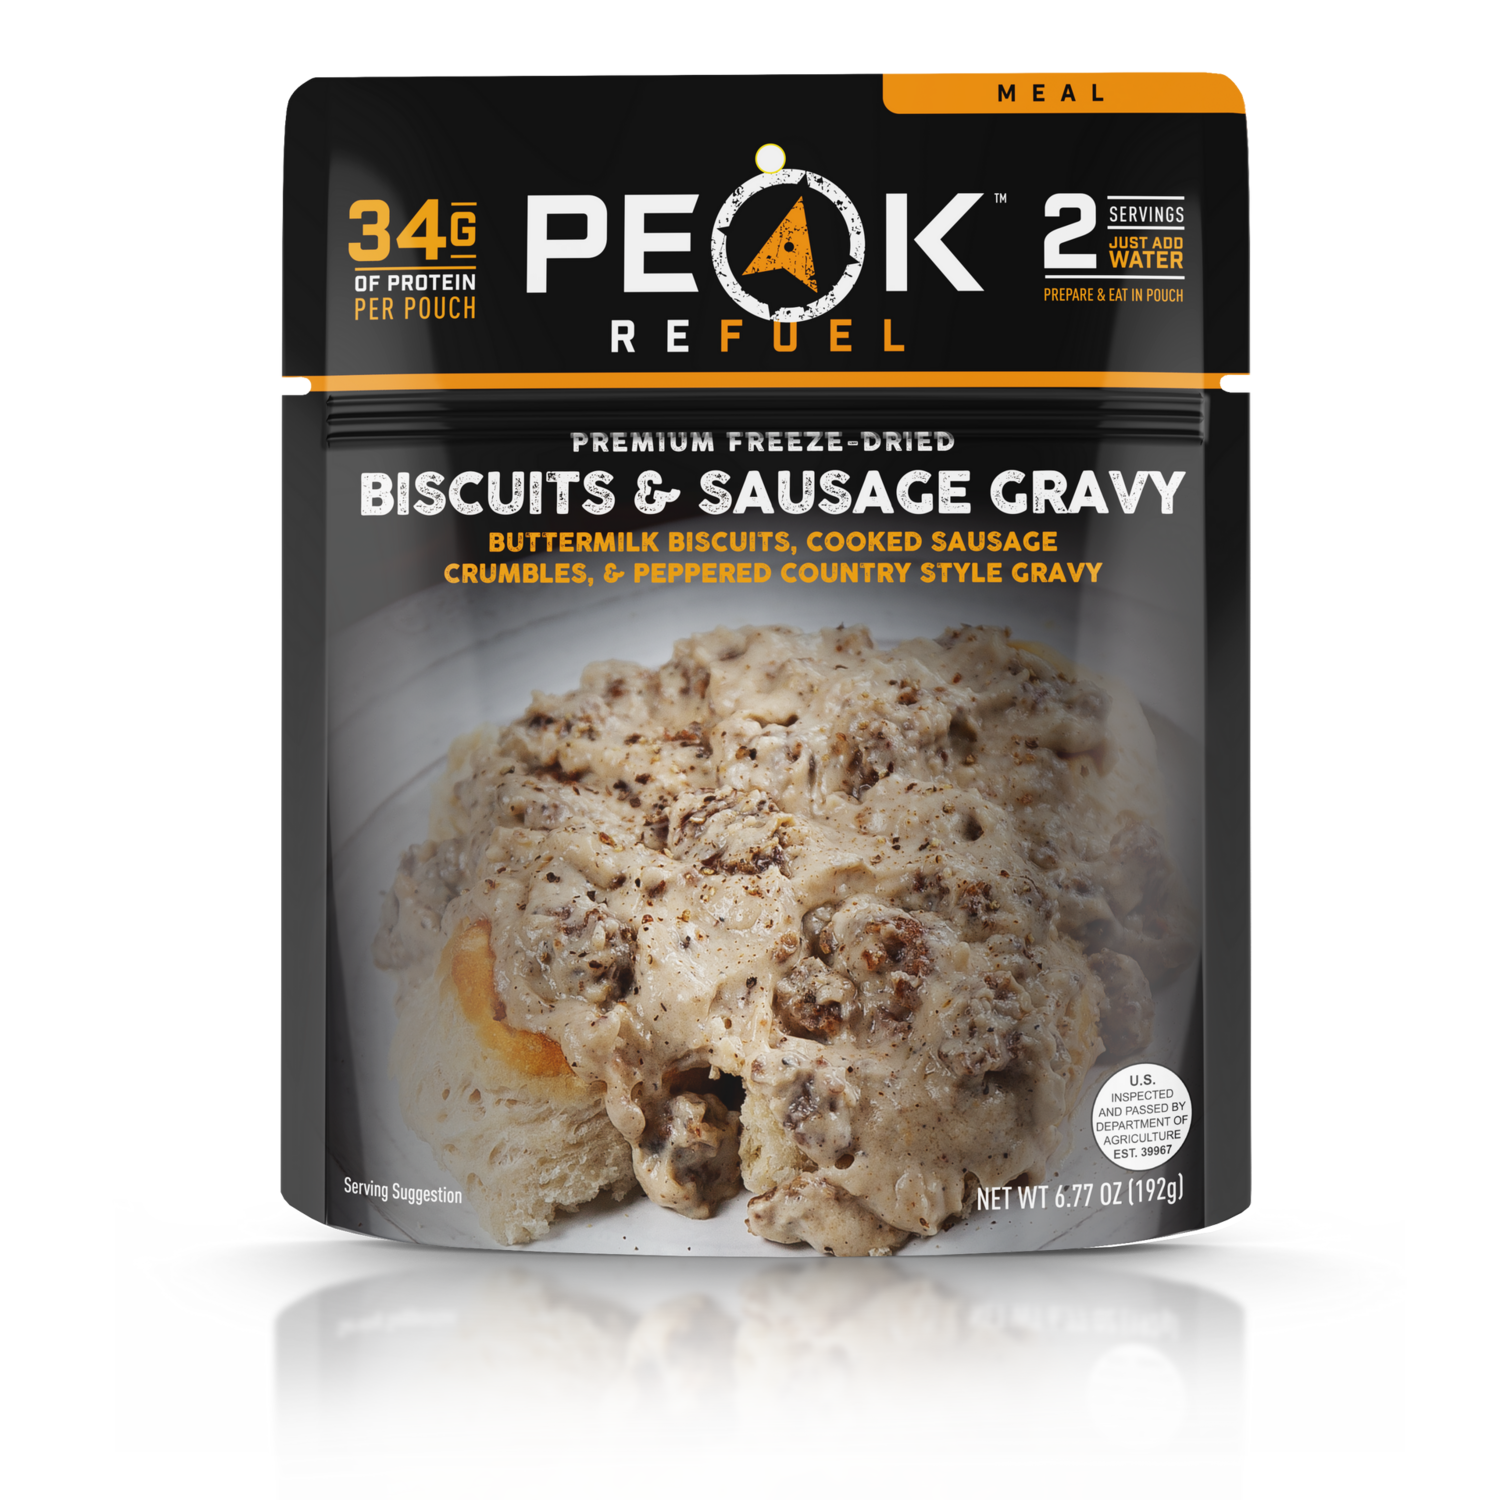 Peak ReFuel Freeze Dried Biscuits and Sausage Gravy